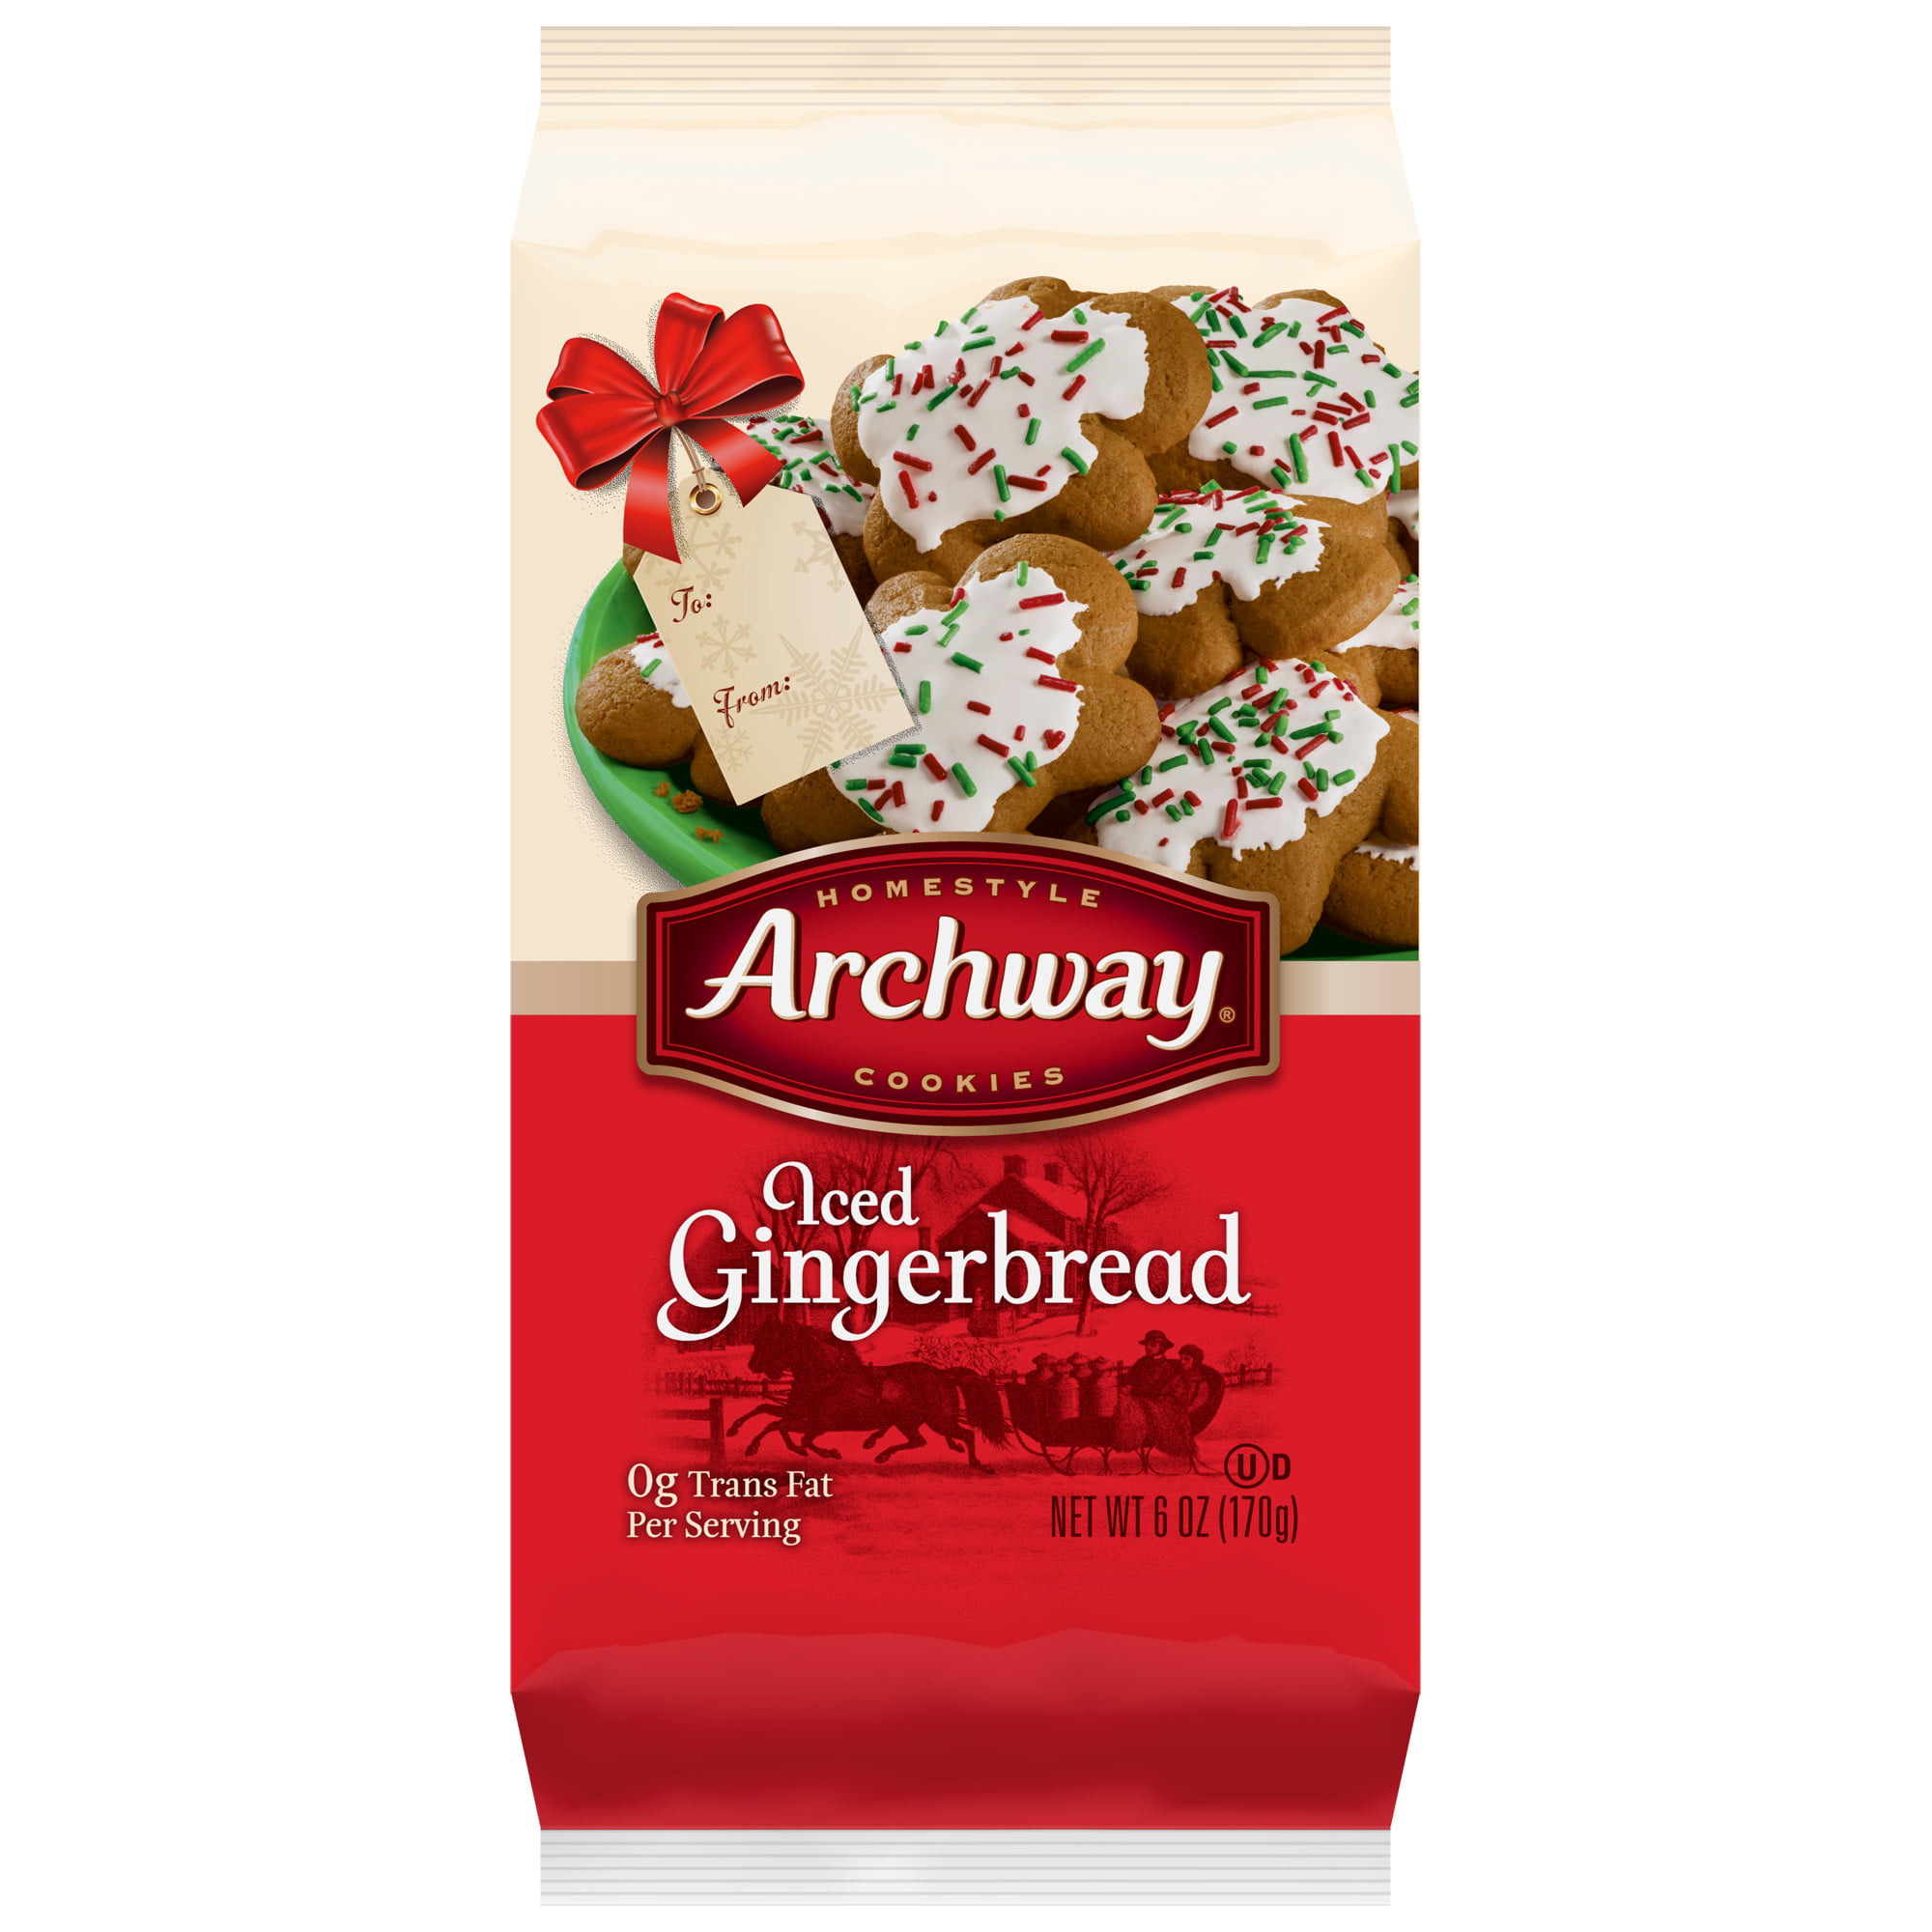 Archway Iced Gingerbread Cookies, 6 Oz - Walmart.com. 